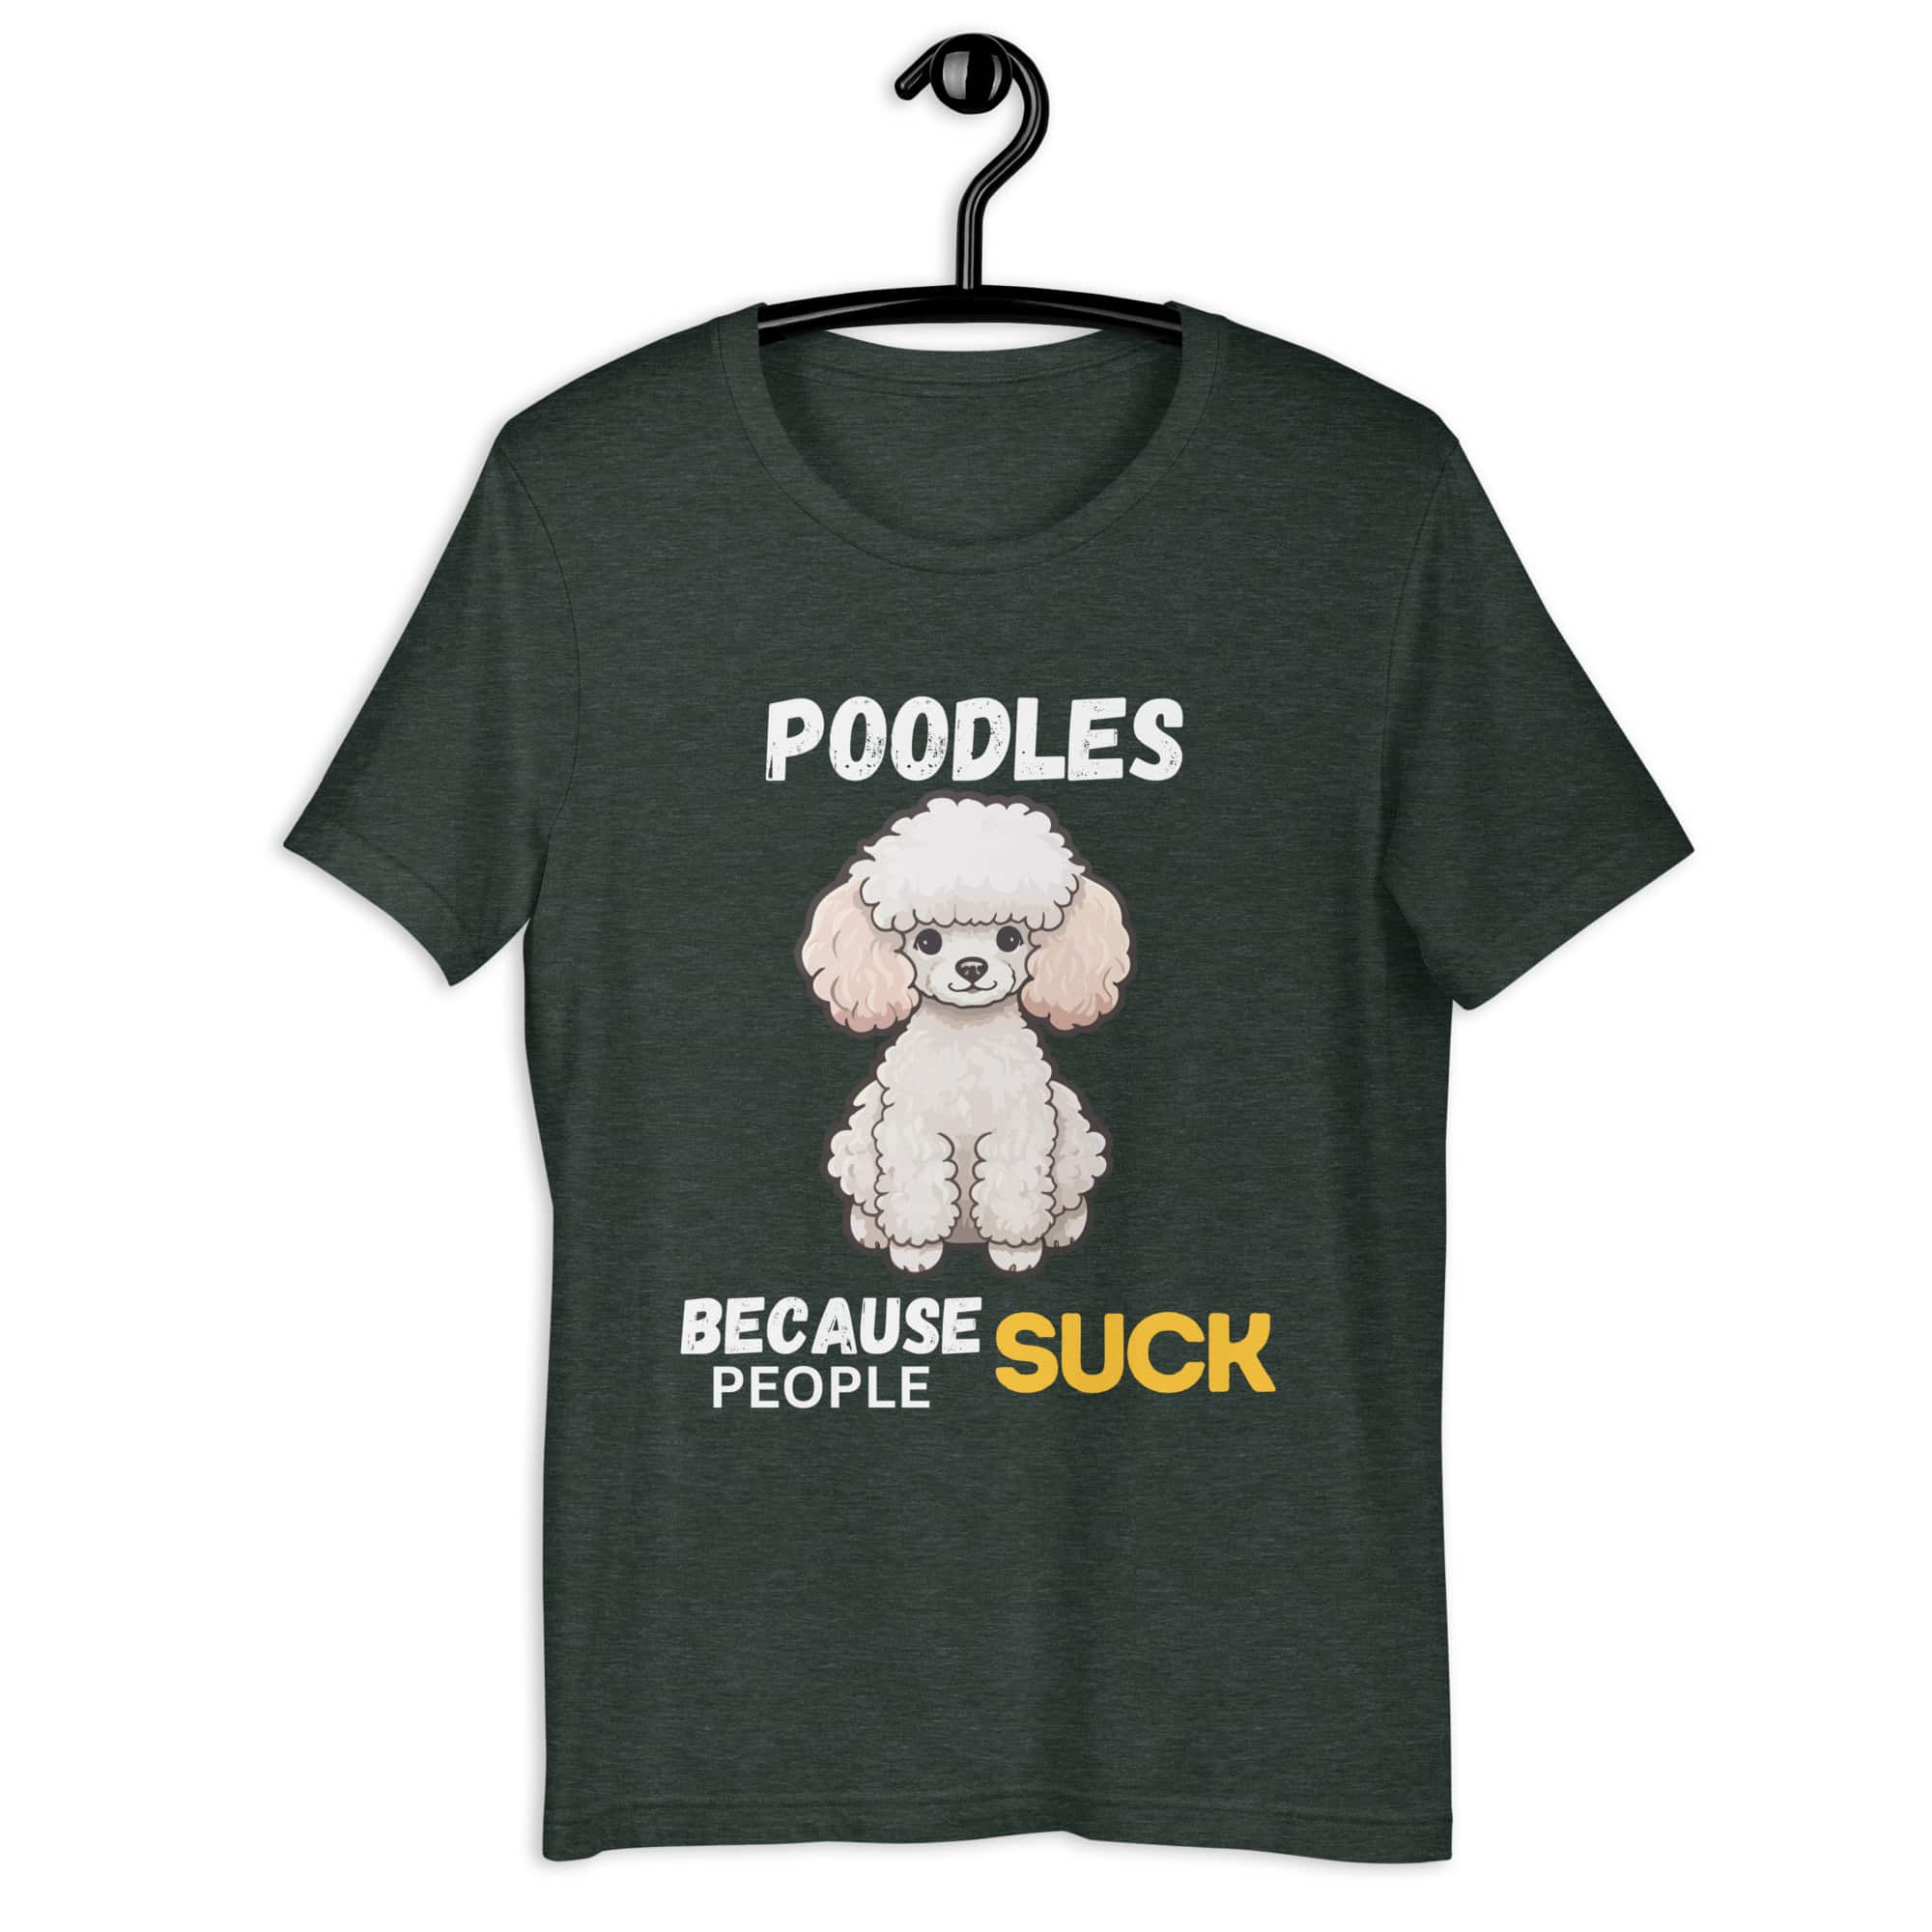 Poodles Because People Suck Unisex T-Shirt matte gray